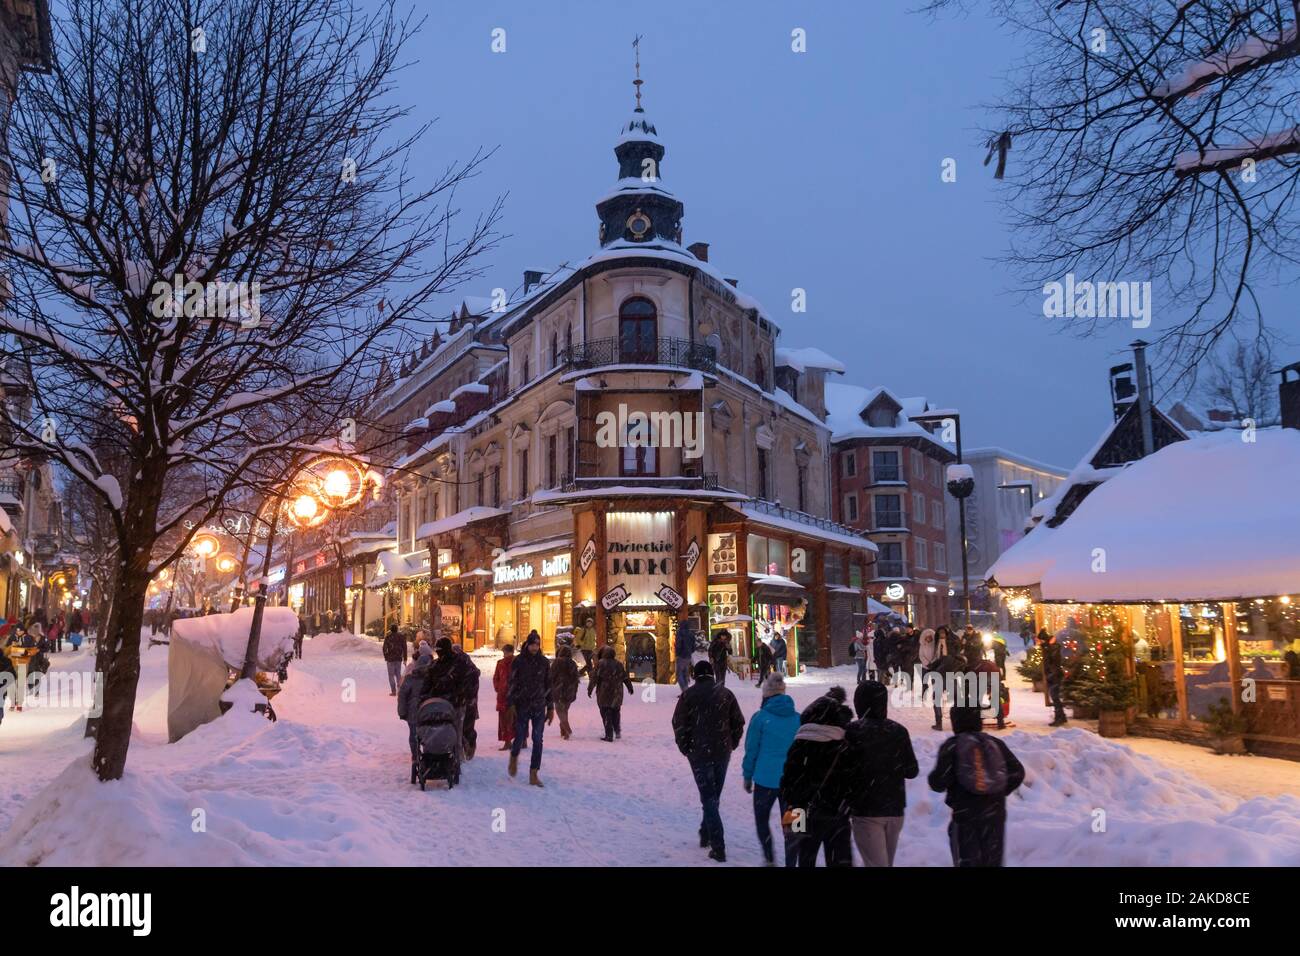 People walking the Krupowki street in winter. Zakopane, Poland, Europe Stock Photo